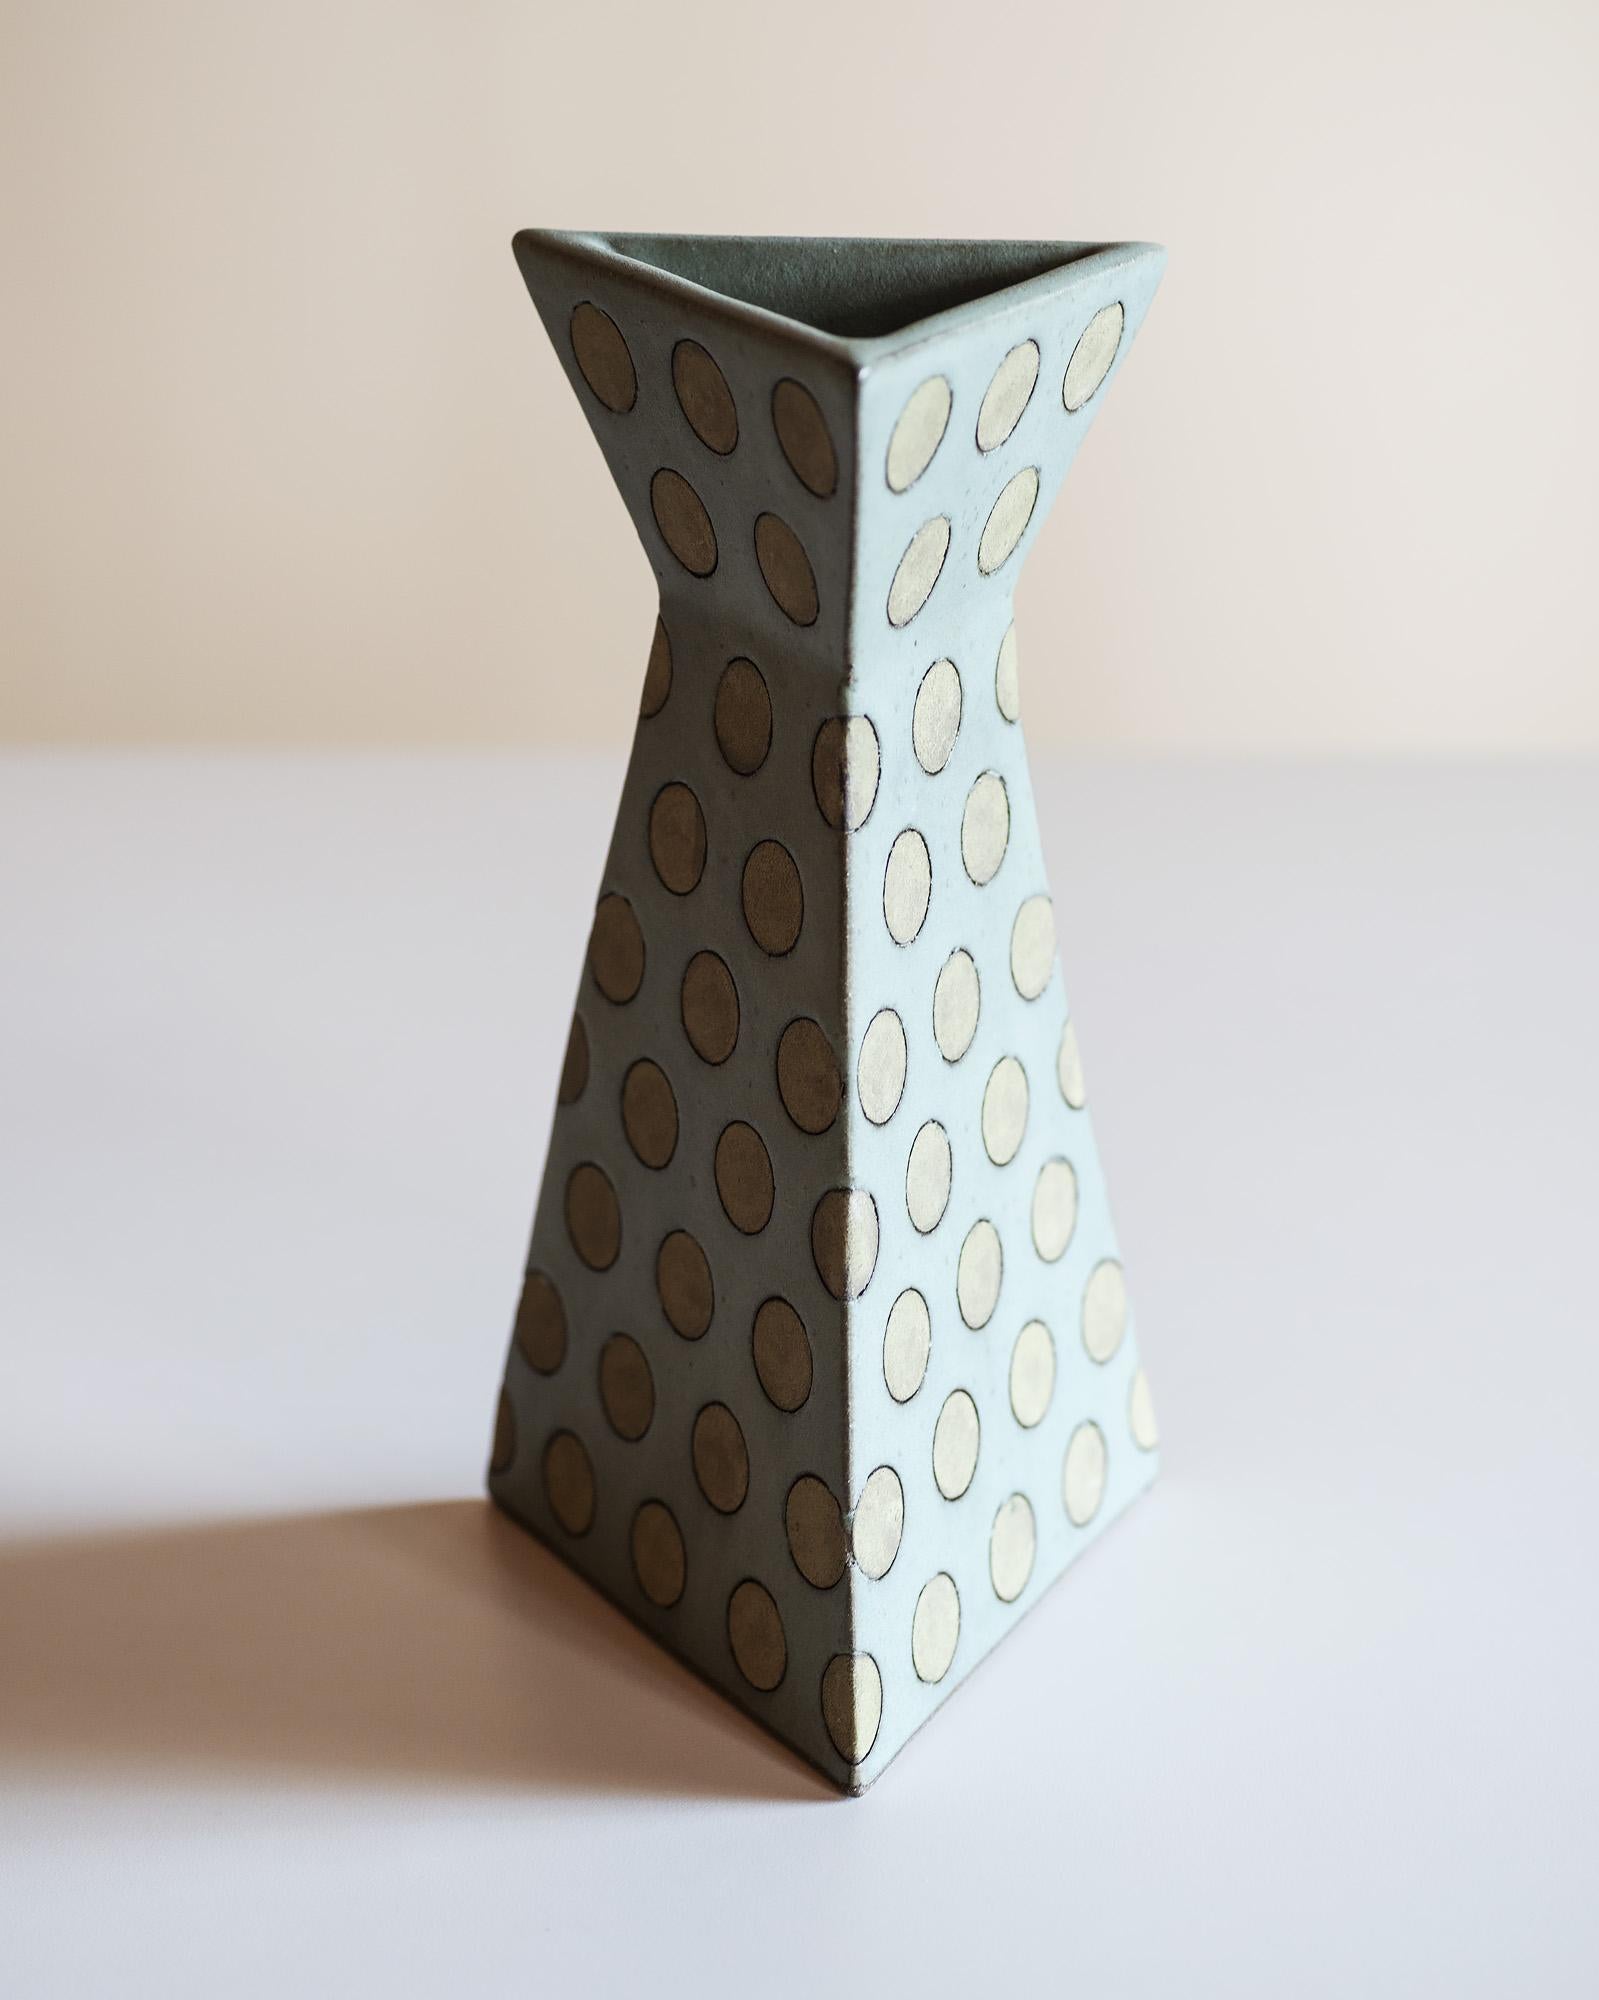 American  Sculptural Polka Dot Vase by Matthew Ward, New Mexico 2019